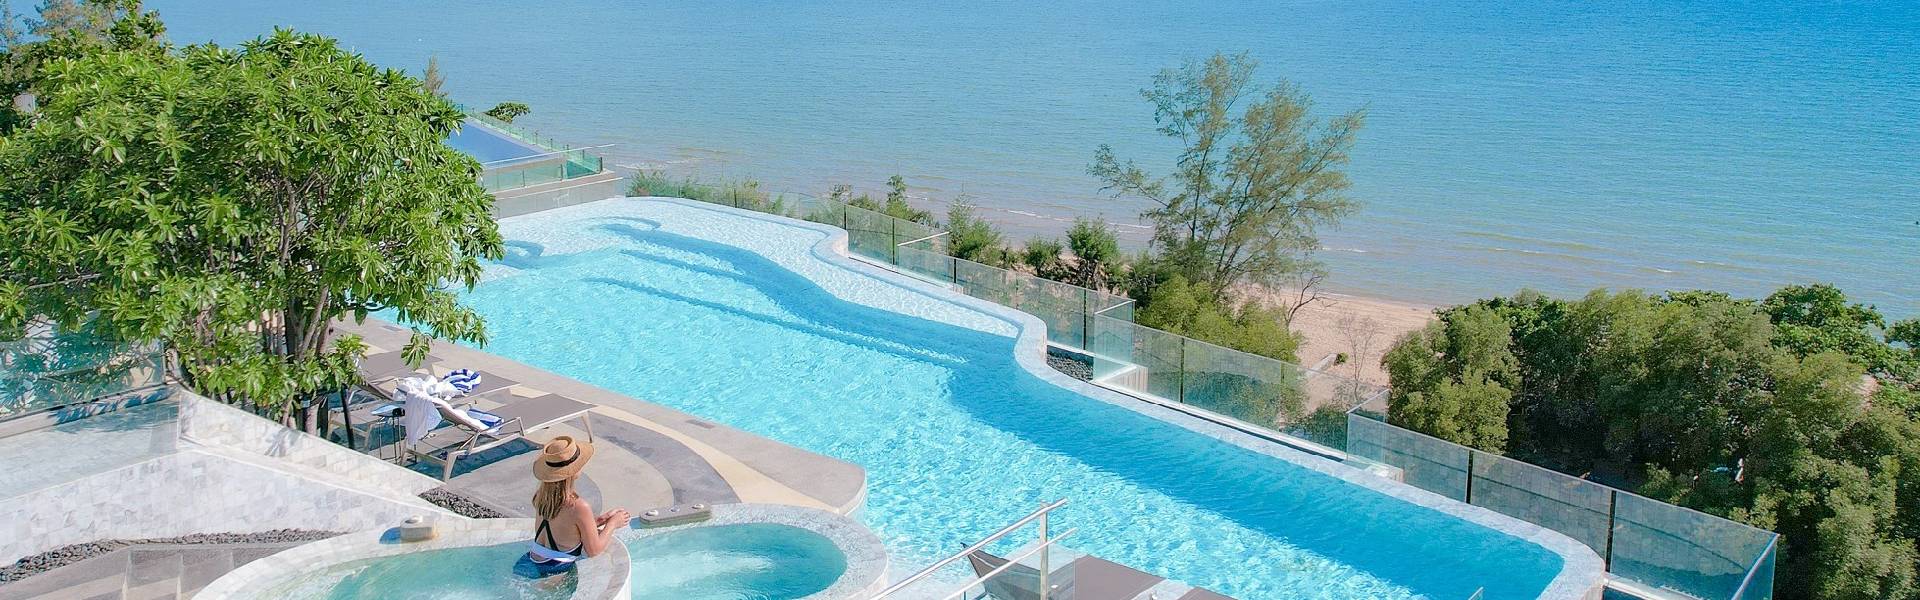 Bayphere Hotel - swimming pool & sea